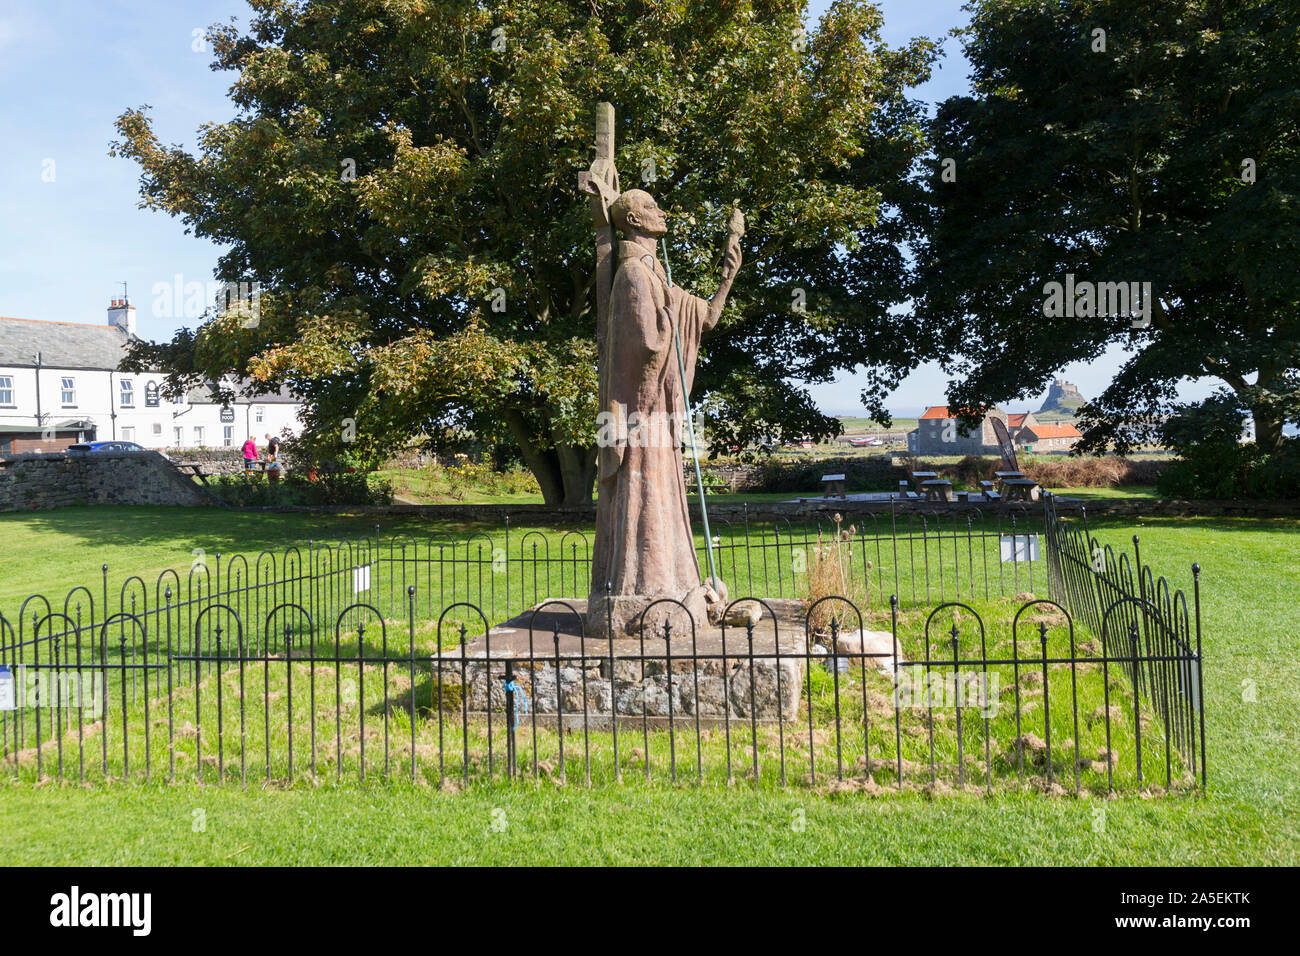 The statue of St Aidan on Lindisfarne / Holy Island Northumberland UK Stock Photo